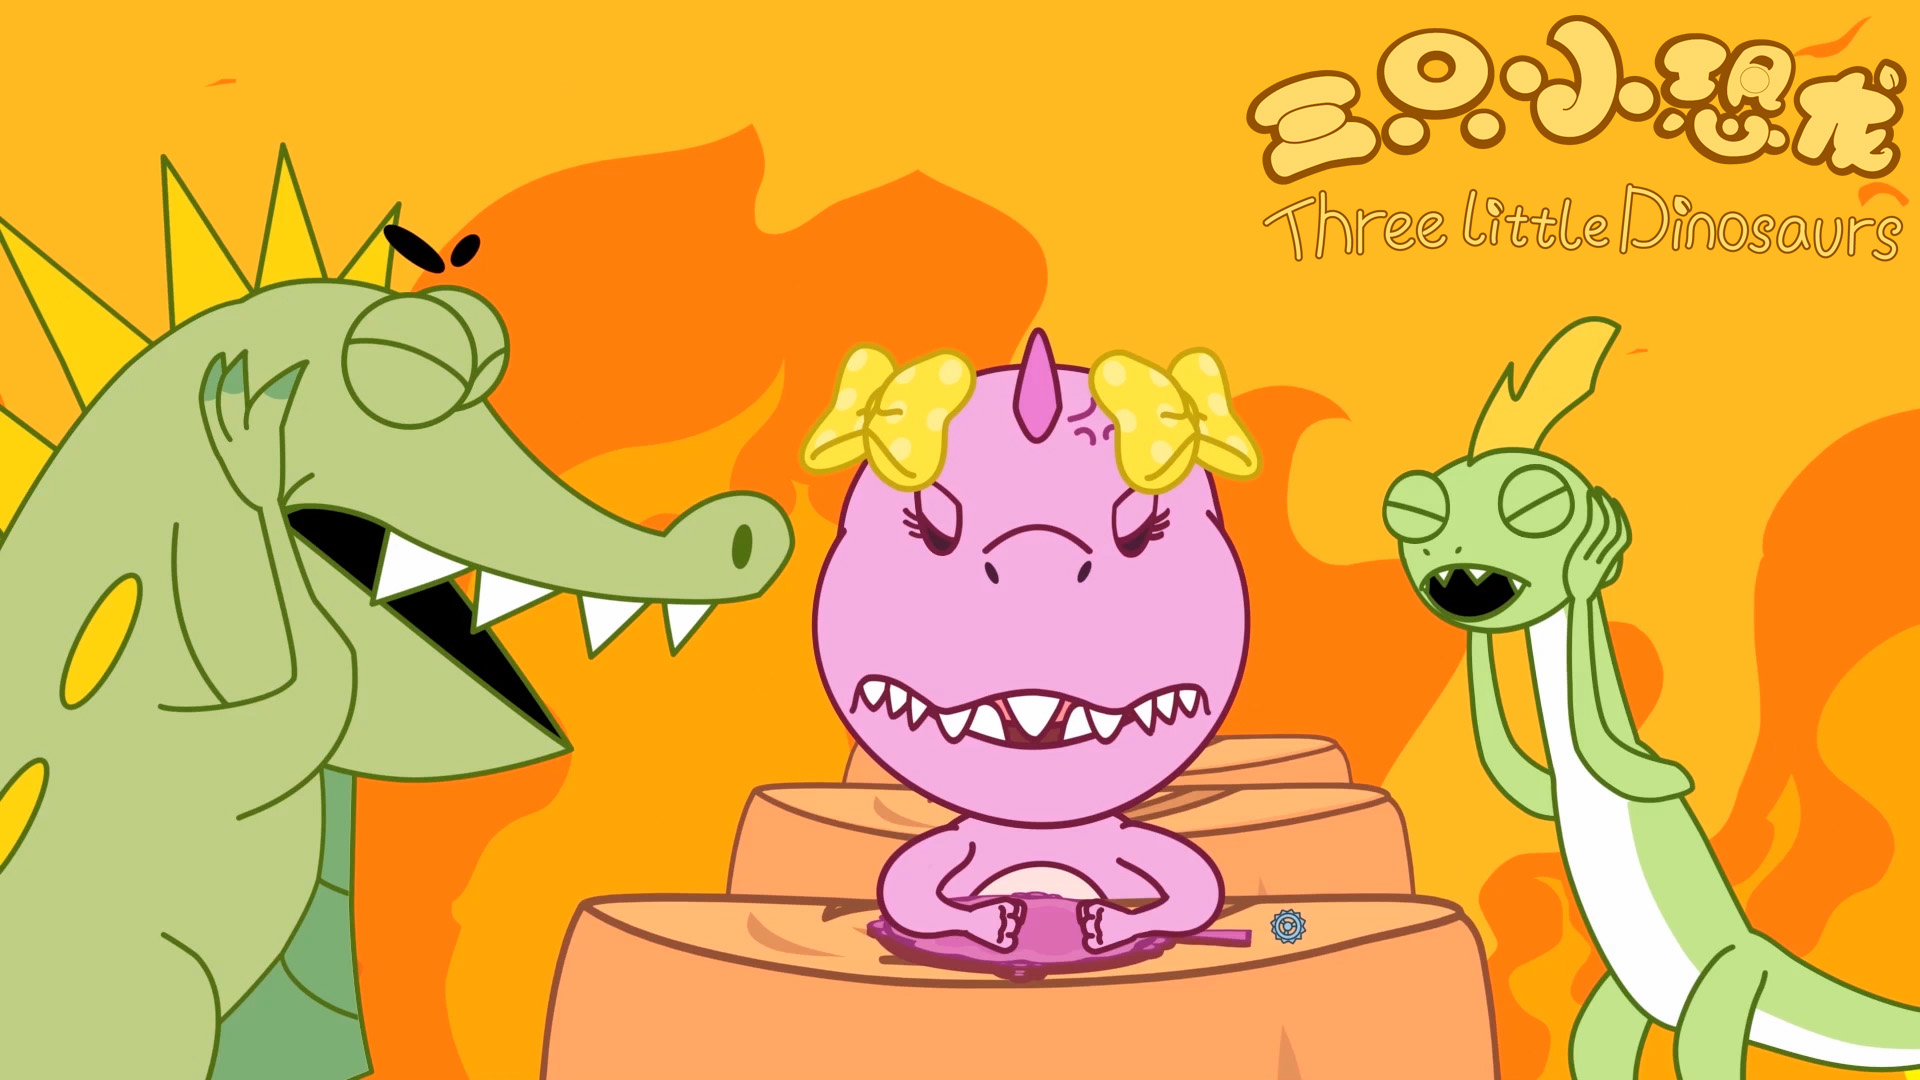 The Moyu Animation Company 墨羽动画旗下动画片三只小恐龙Three Little Dinosaurs剧照之3